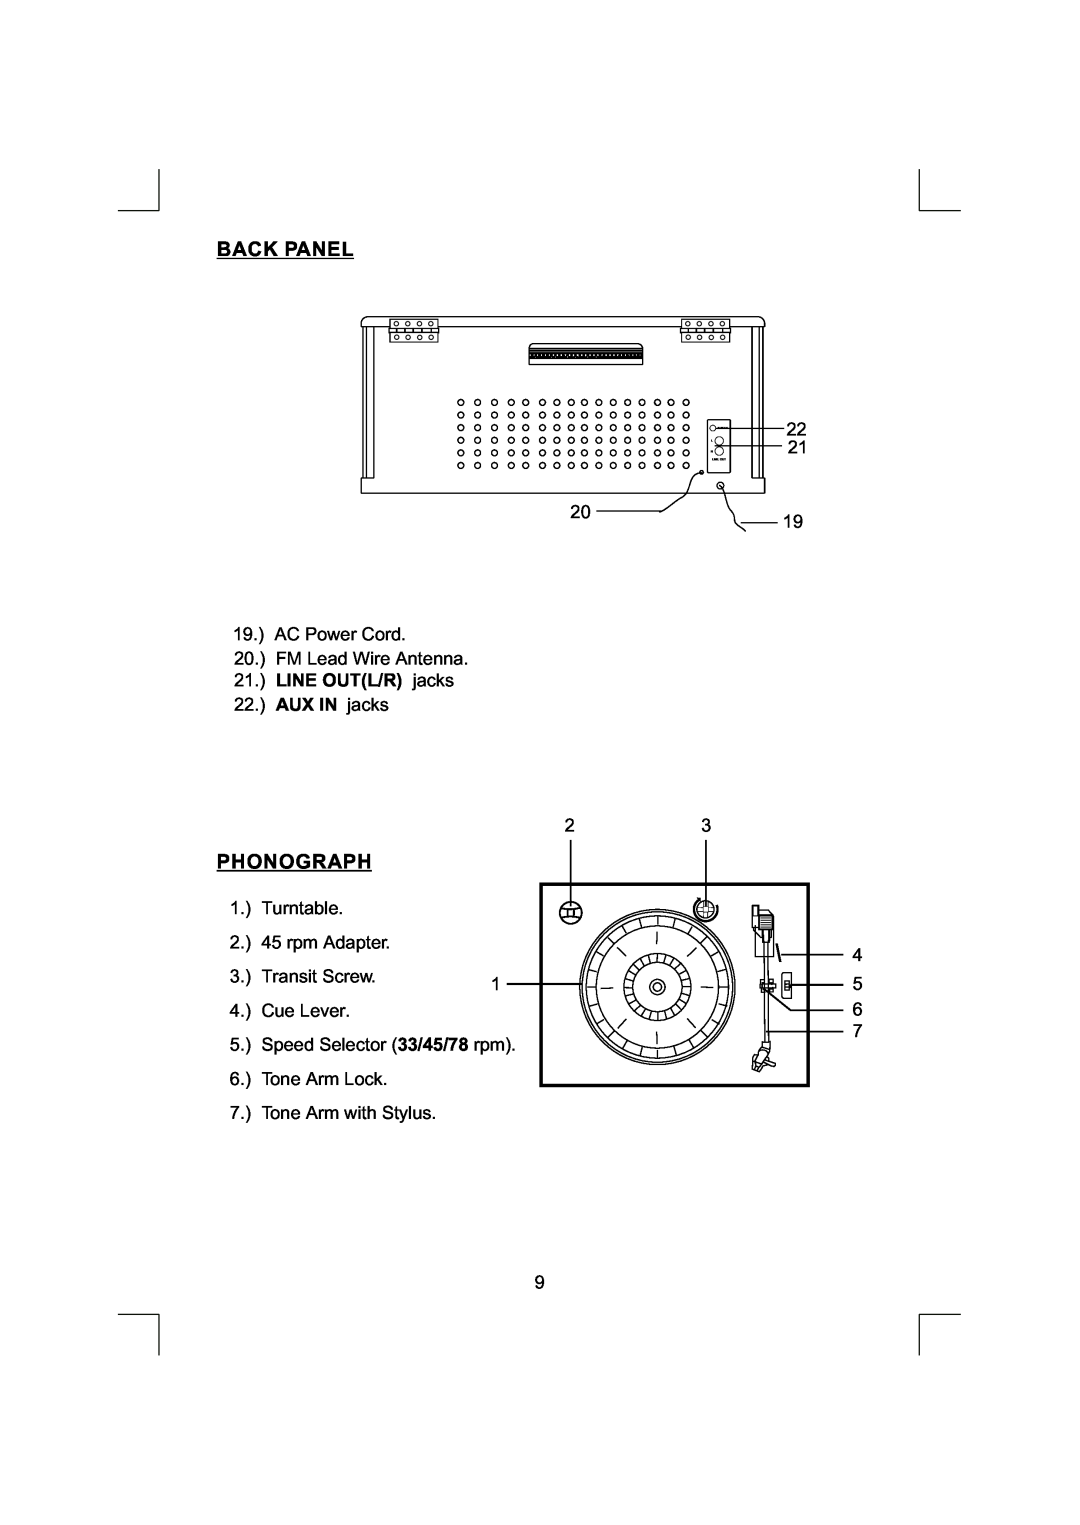 Emerson NR290TTC owner manual Back Panel, Phonograph, LINE OUTL/R jacks 